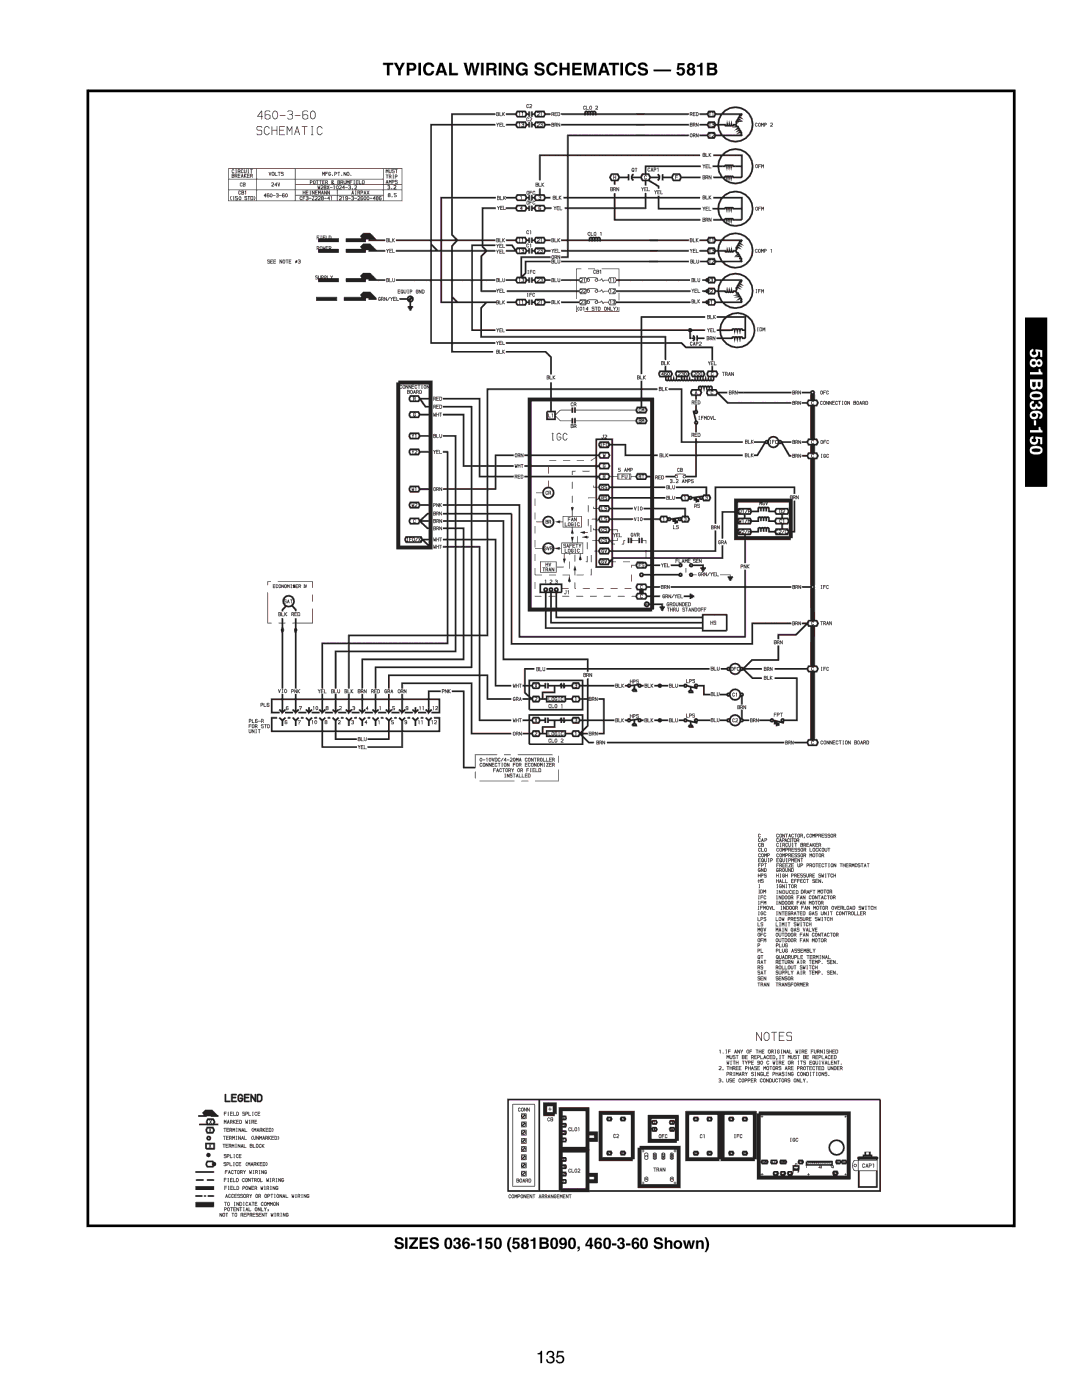 Bryant 581A/B manual Typical Wiring Schematics 581B, Sizes 036-150 581B090, 460-3-60 Shown 